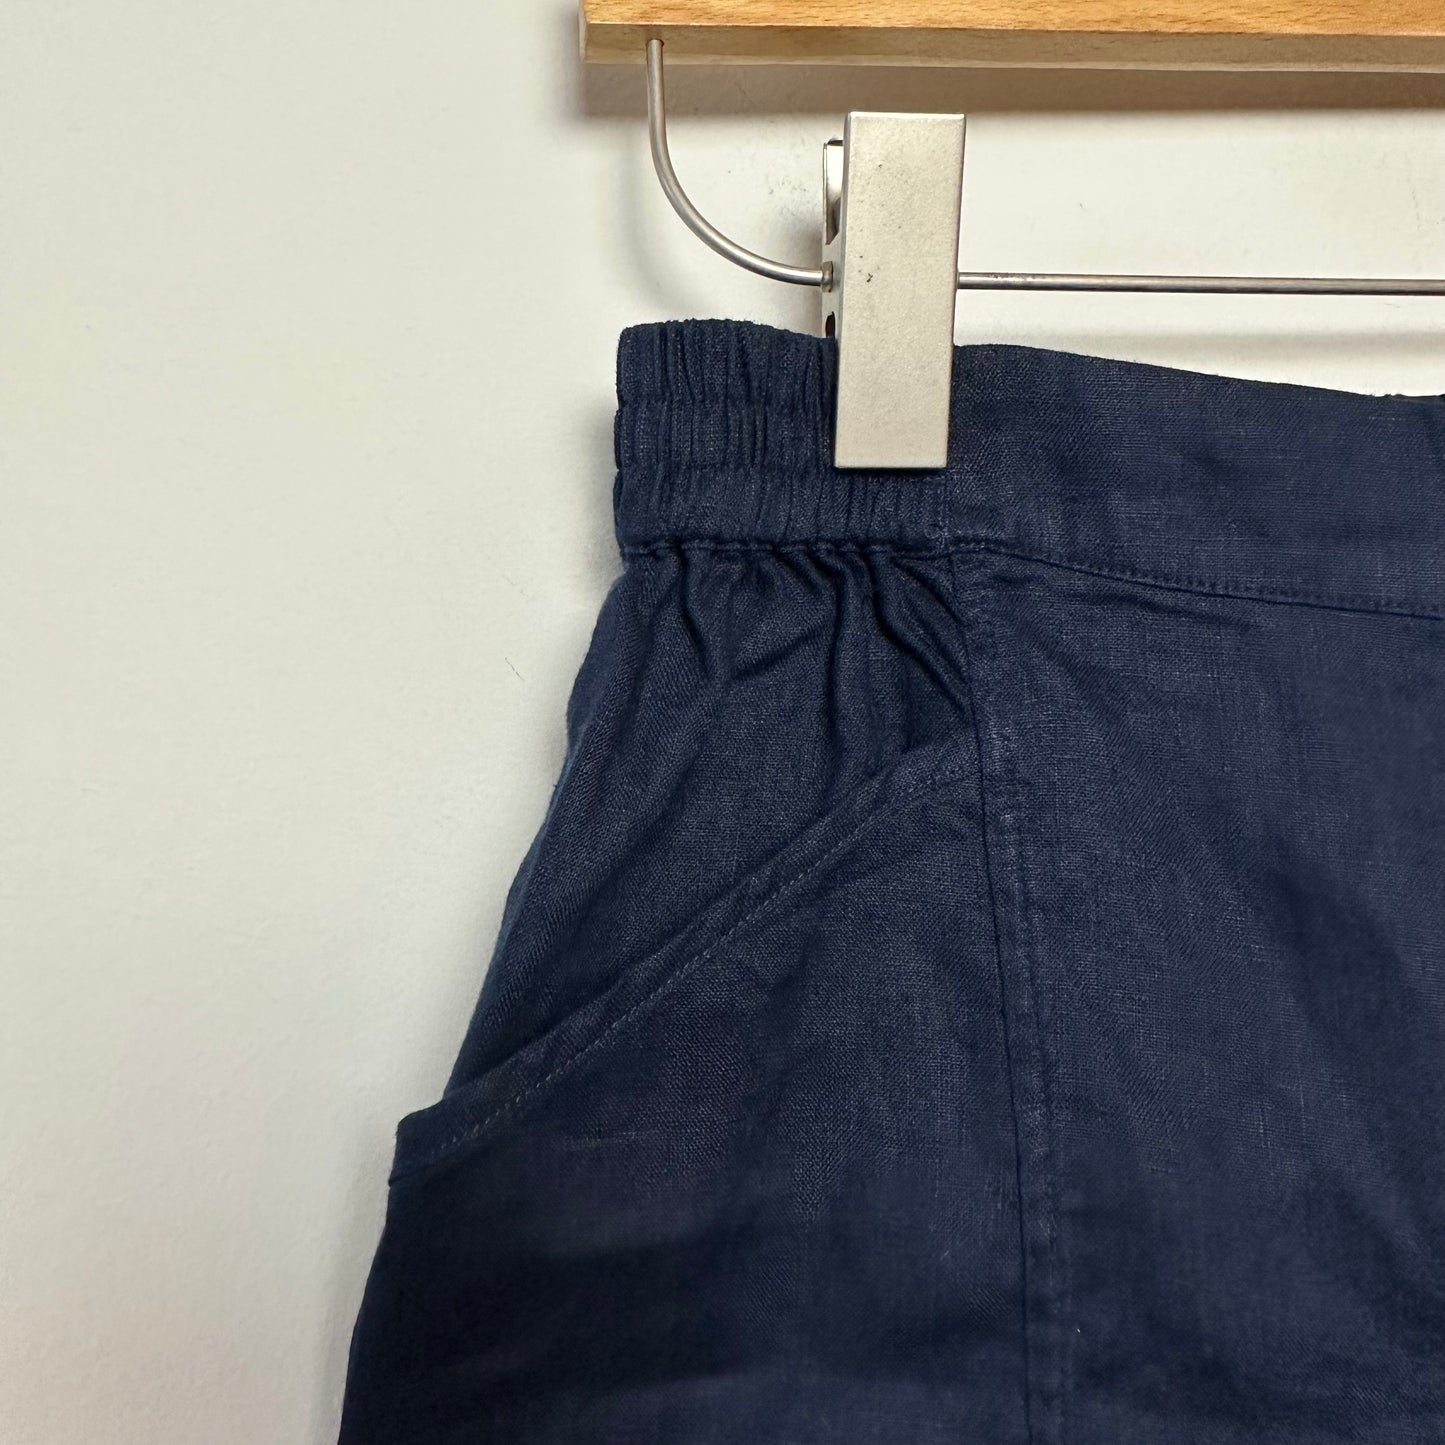 Lunya Woven Linen Shorts Navy Blue Medium Pull On High Rise